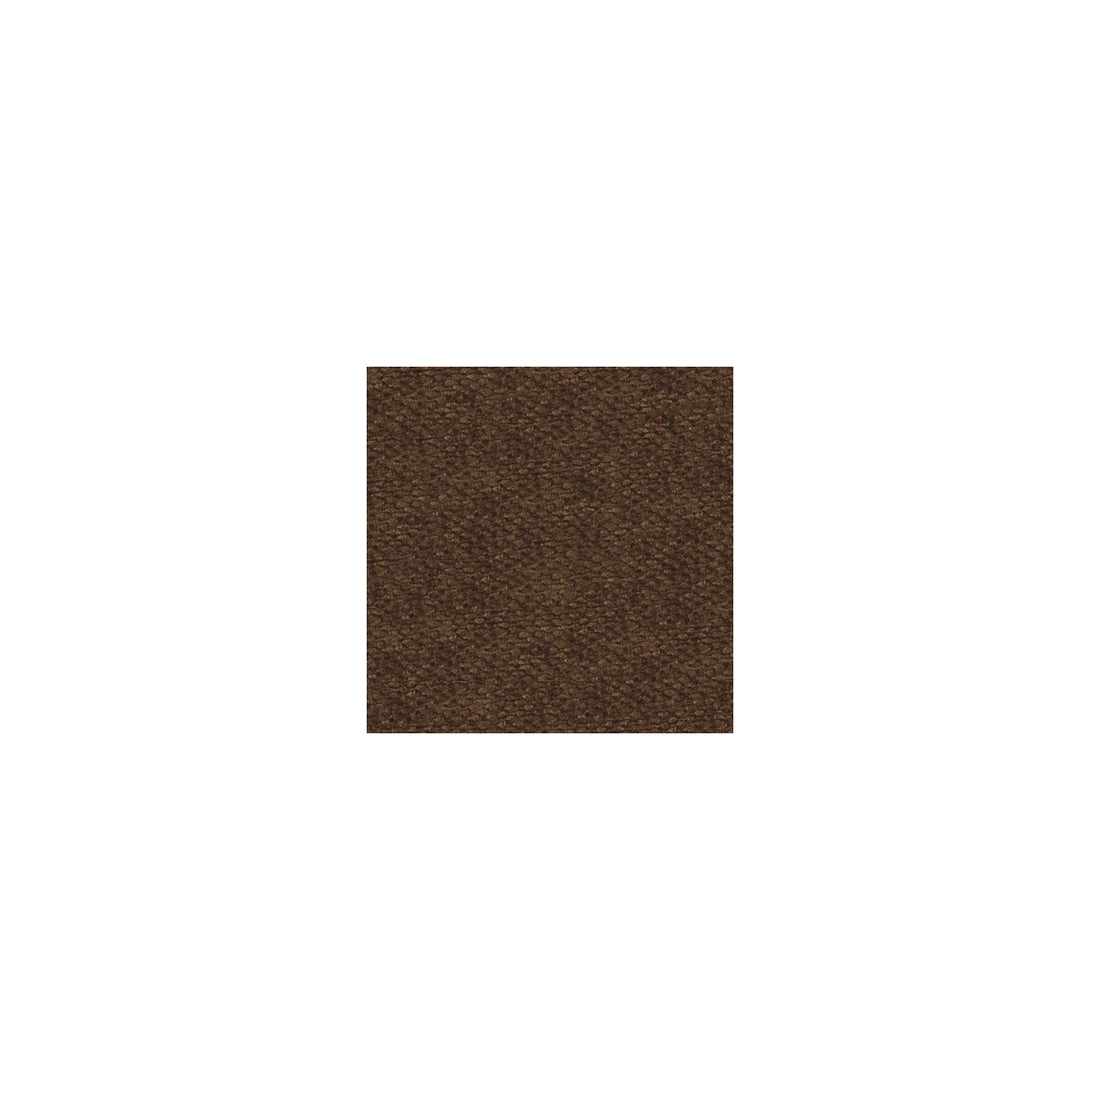 Palmata fabric in bark color - pattern 29151.6.0 - by Kravet Smart